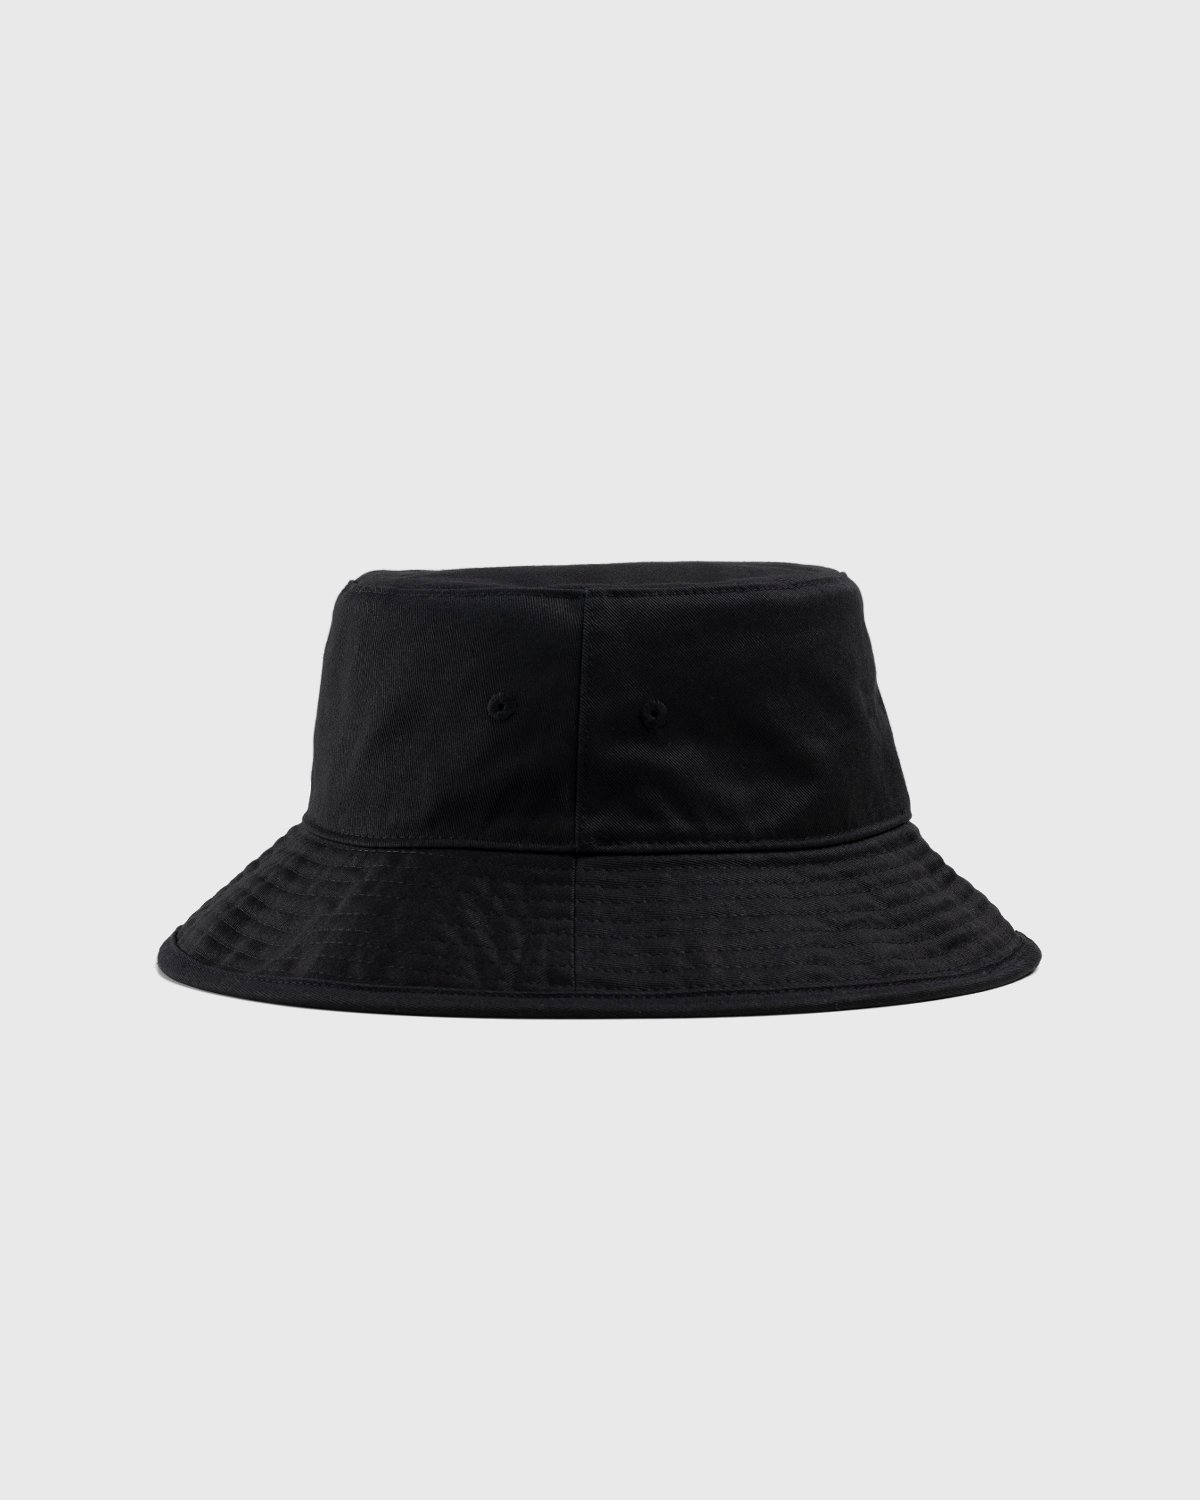 Acne Studios - Twill Bucket Hat Black - Accessories - Black - Image 2